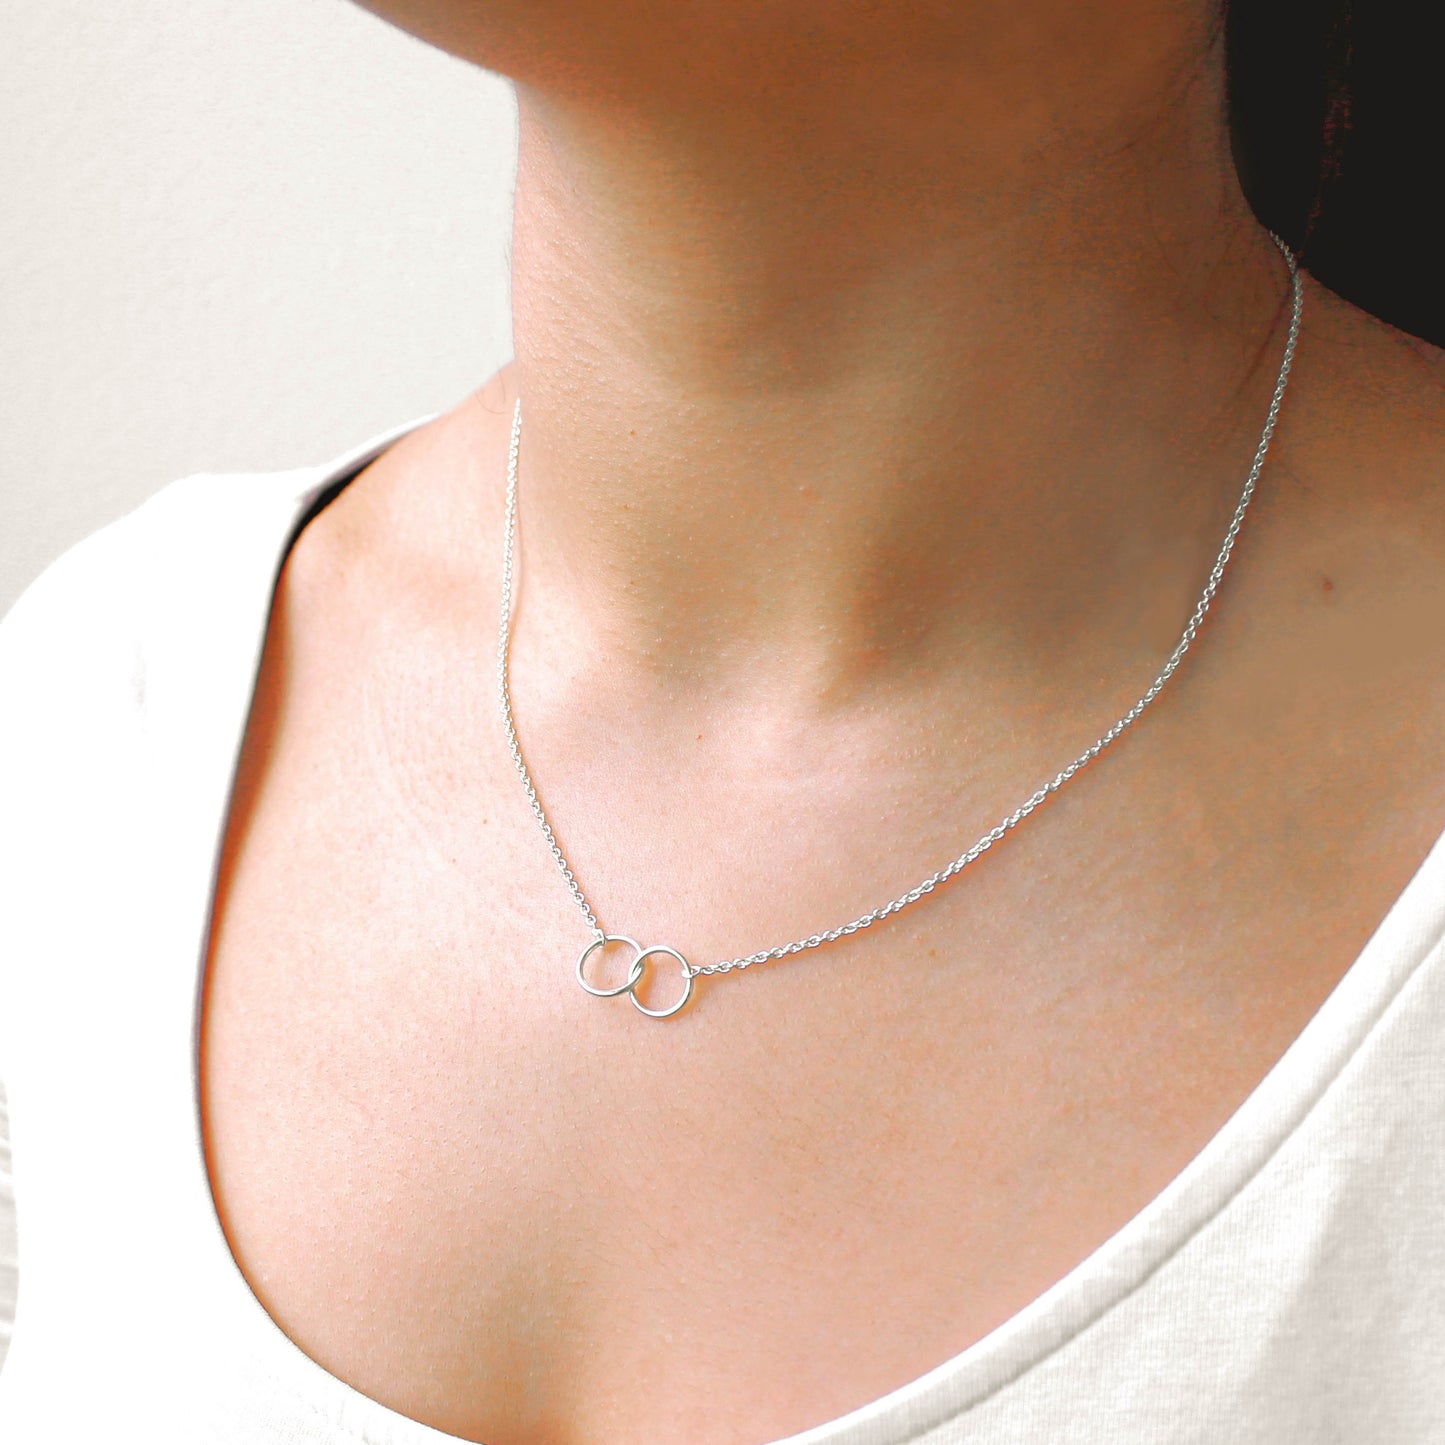 Sterling Silver Fine Belcher Chain Infinity Necklace